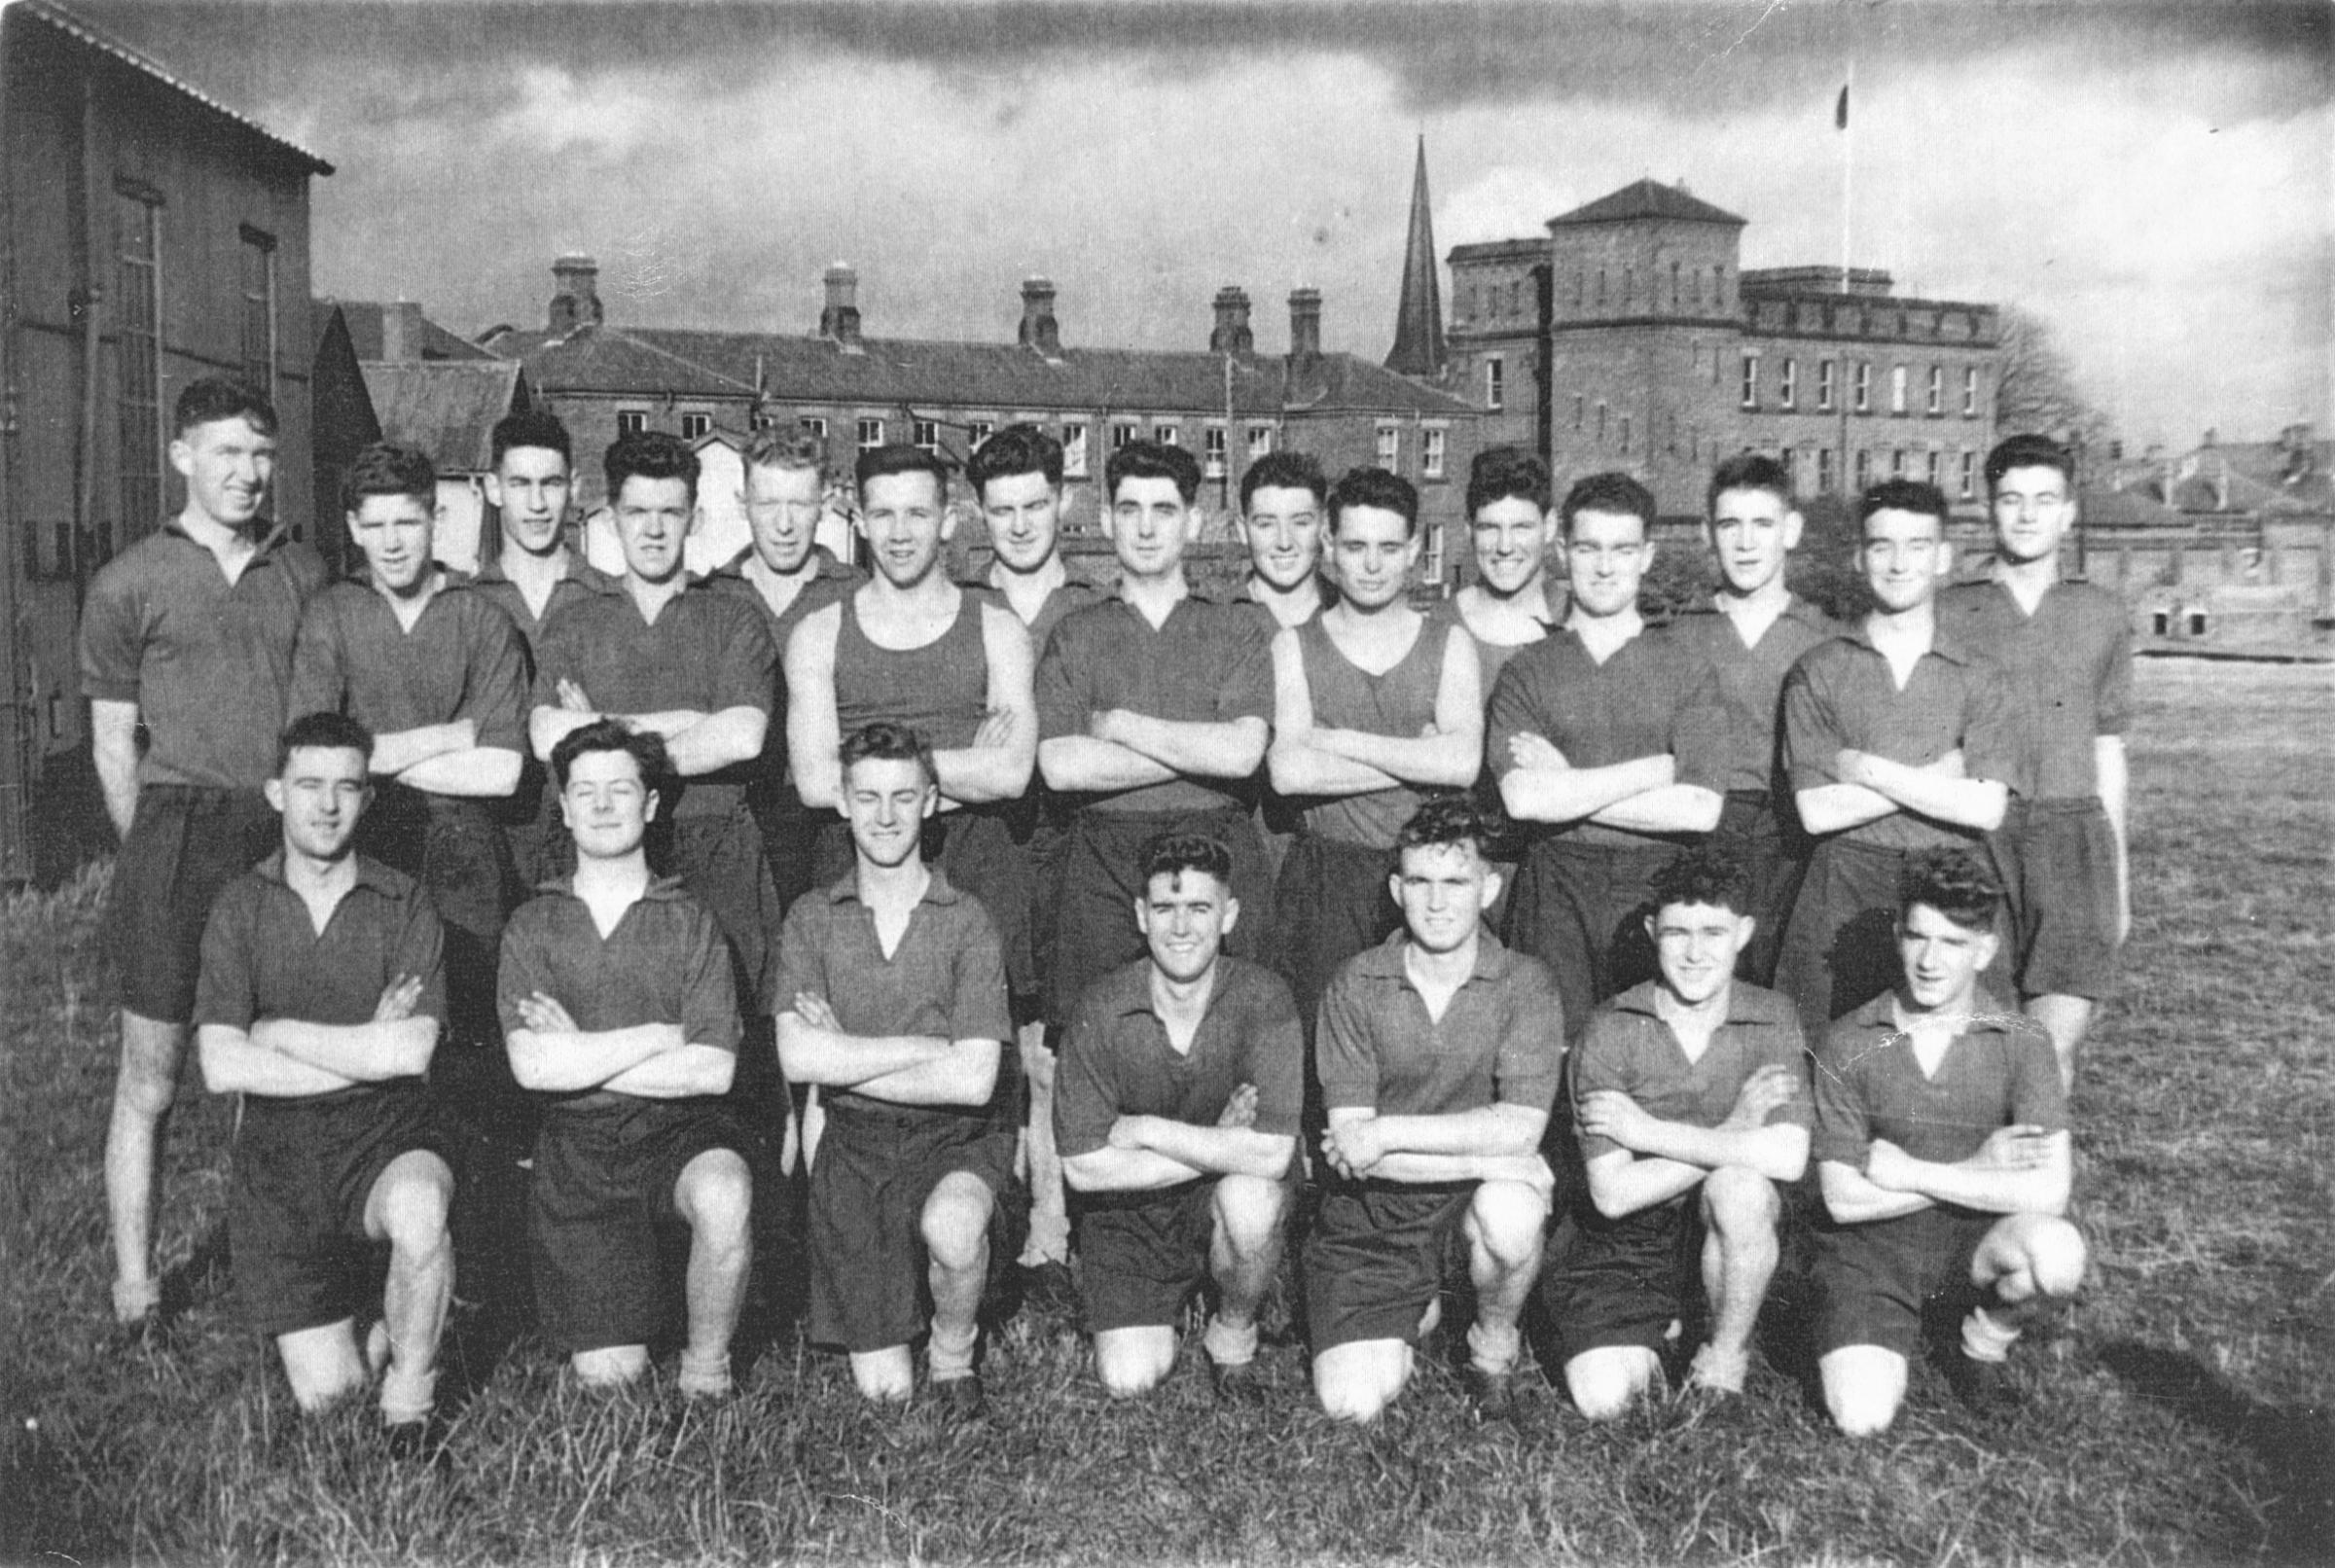 Burma Platoon, RWF (in PT kit), Hightown Barracks, Wrexham, 1955. Gareth Thomas, middle row, third from right. Photo courtesy of Ronan Thomas